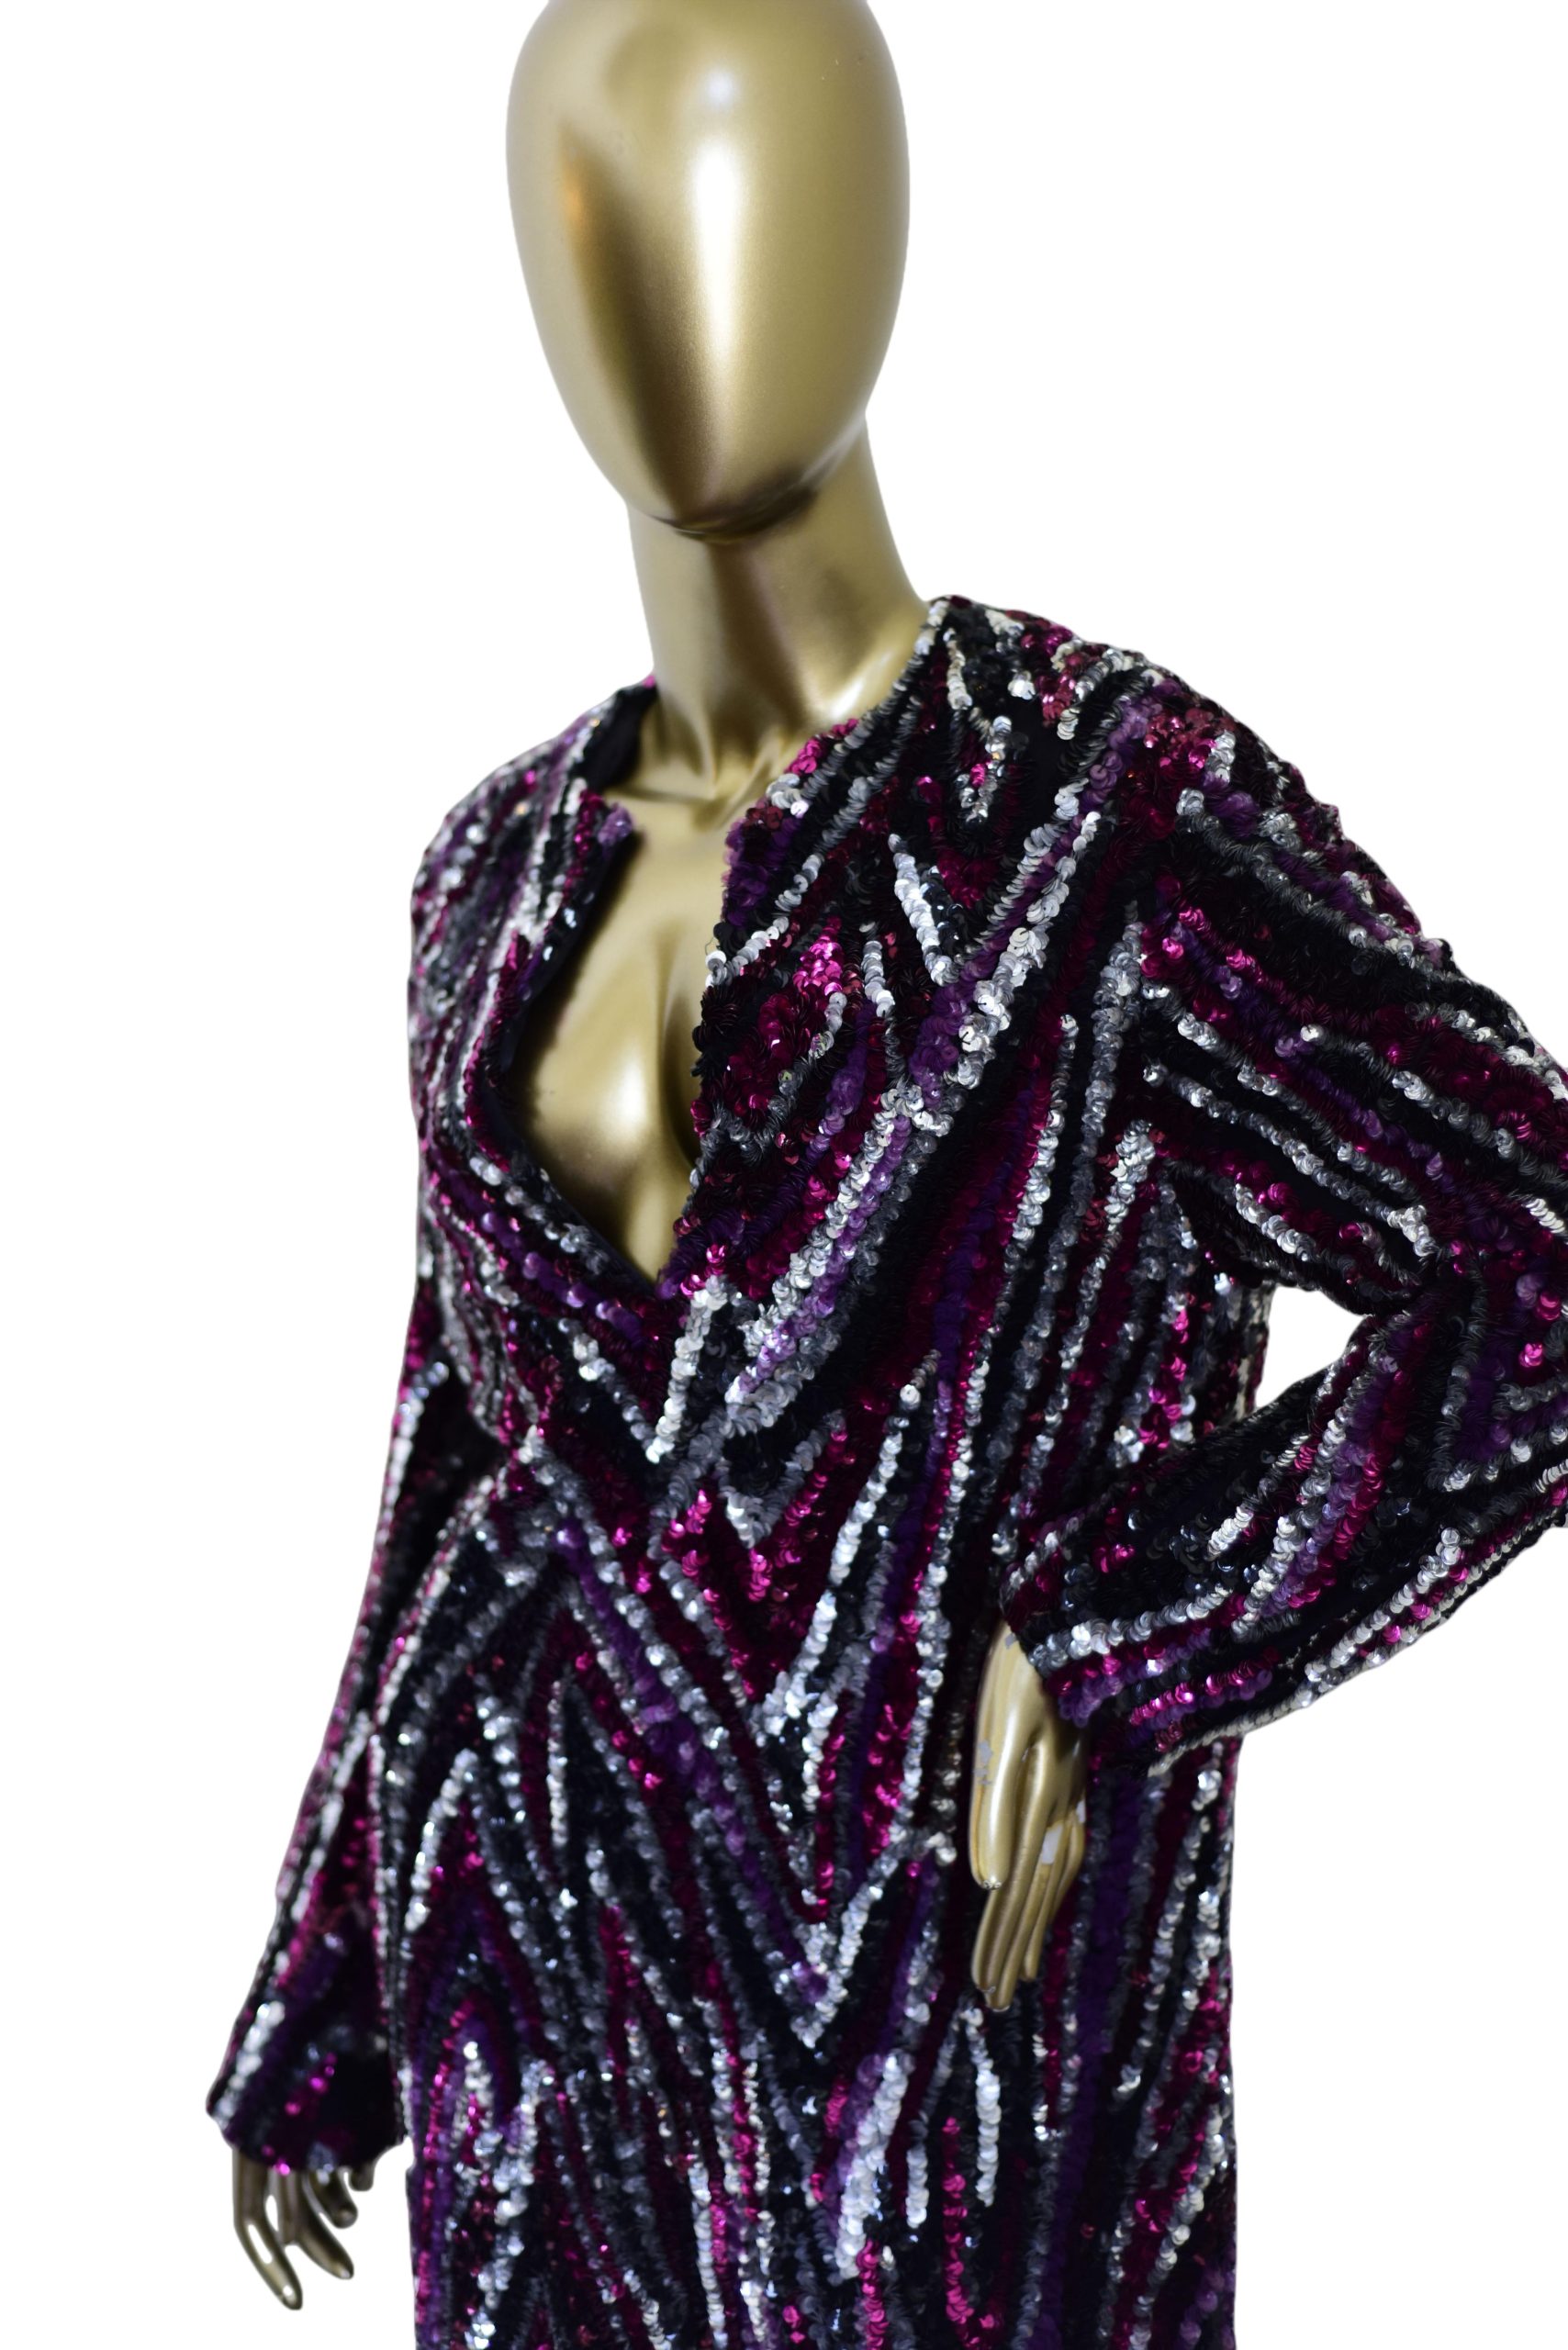 Tom Ford Long Sleeve Sequin Dress - Janet Mandell